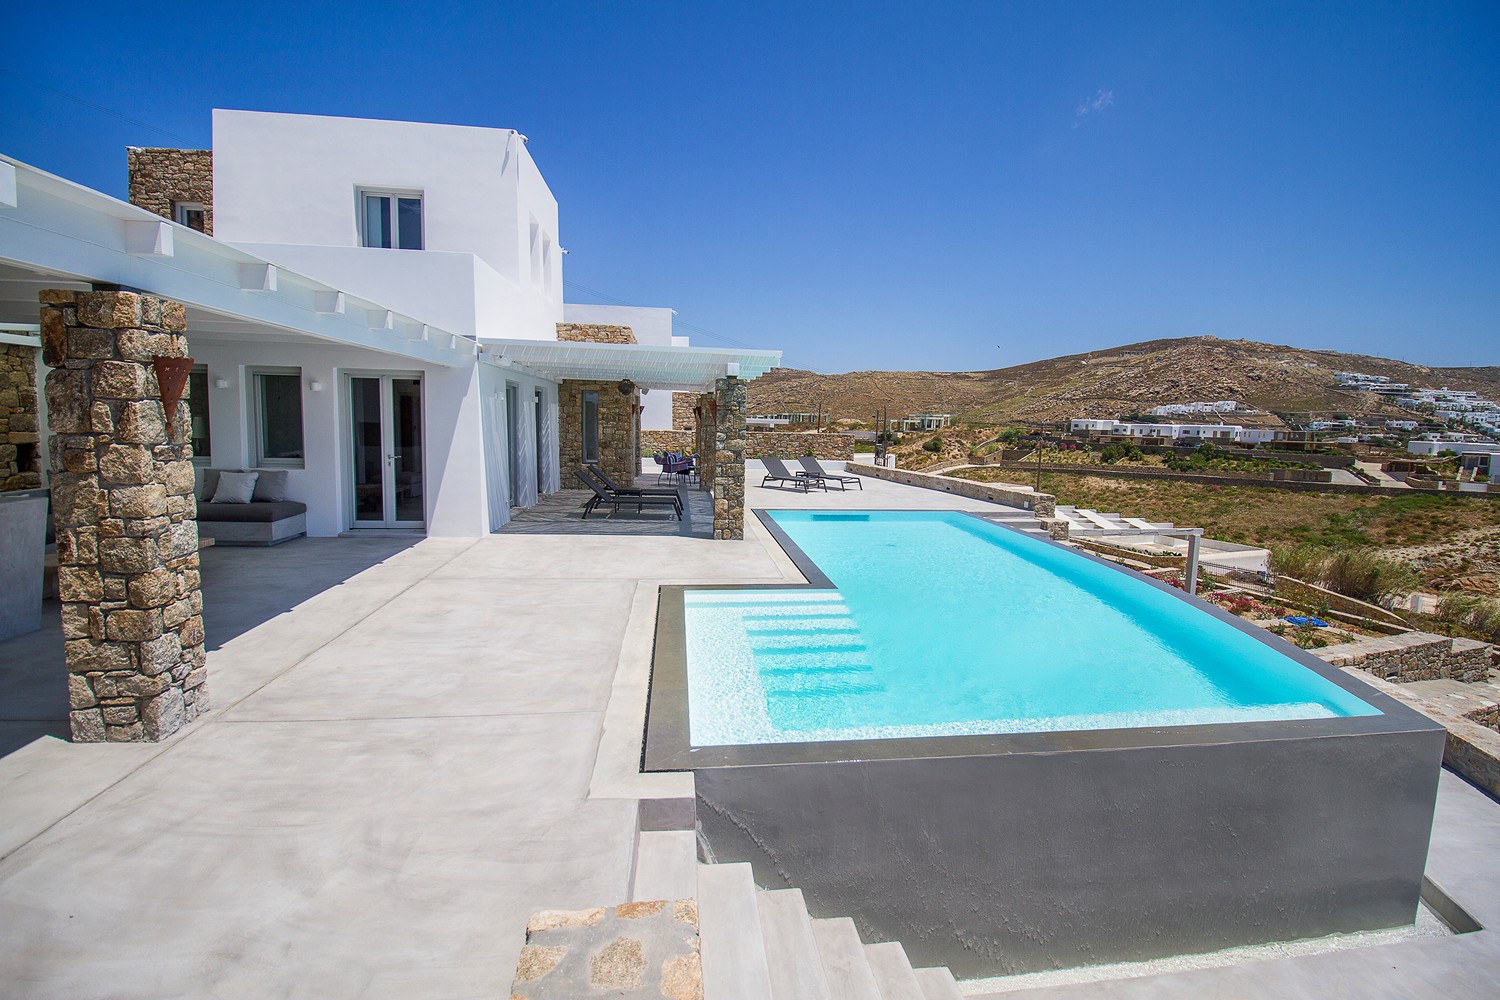 A Mykonos villa with a pool